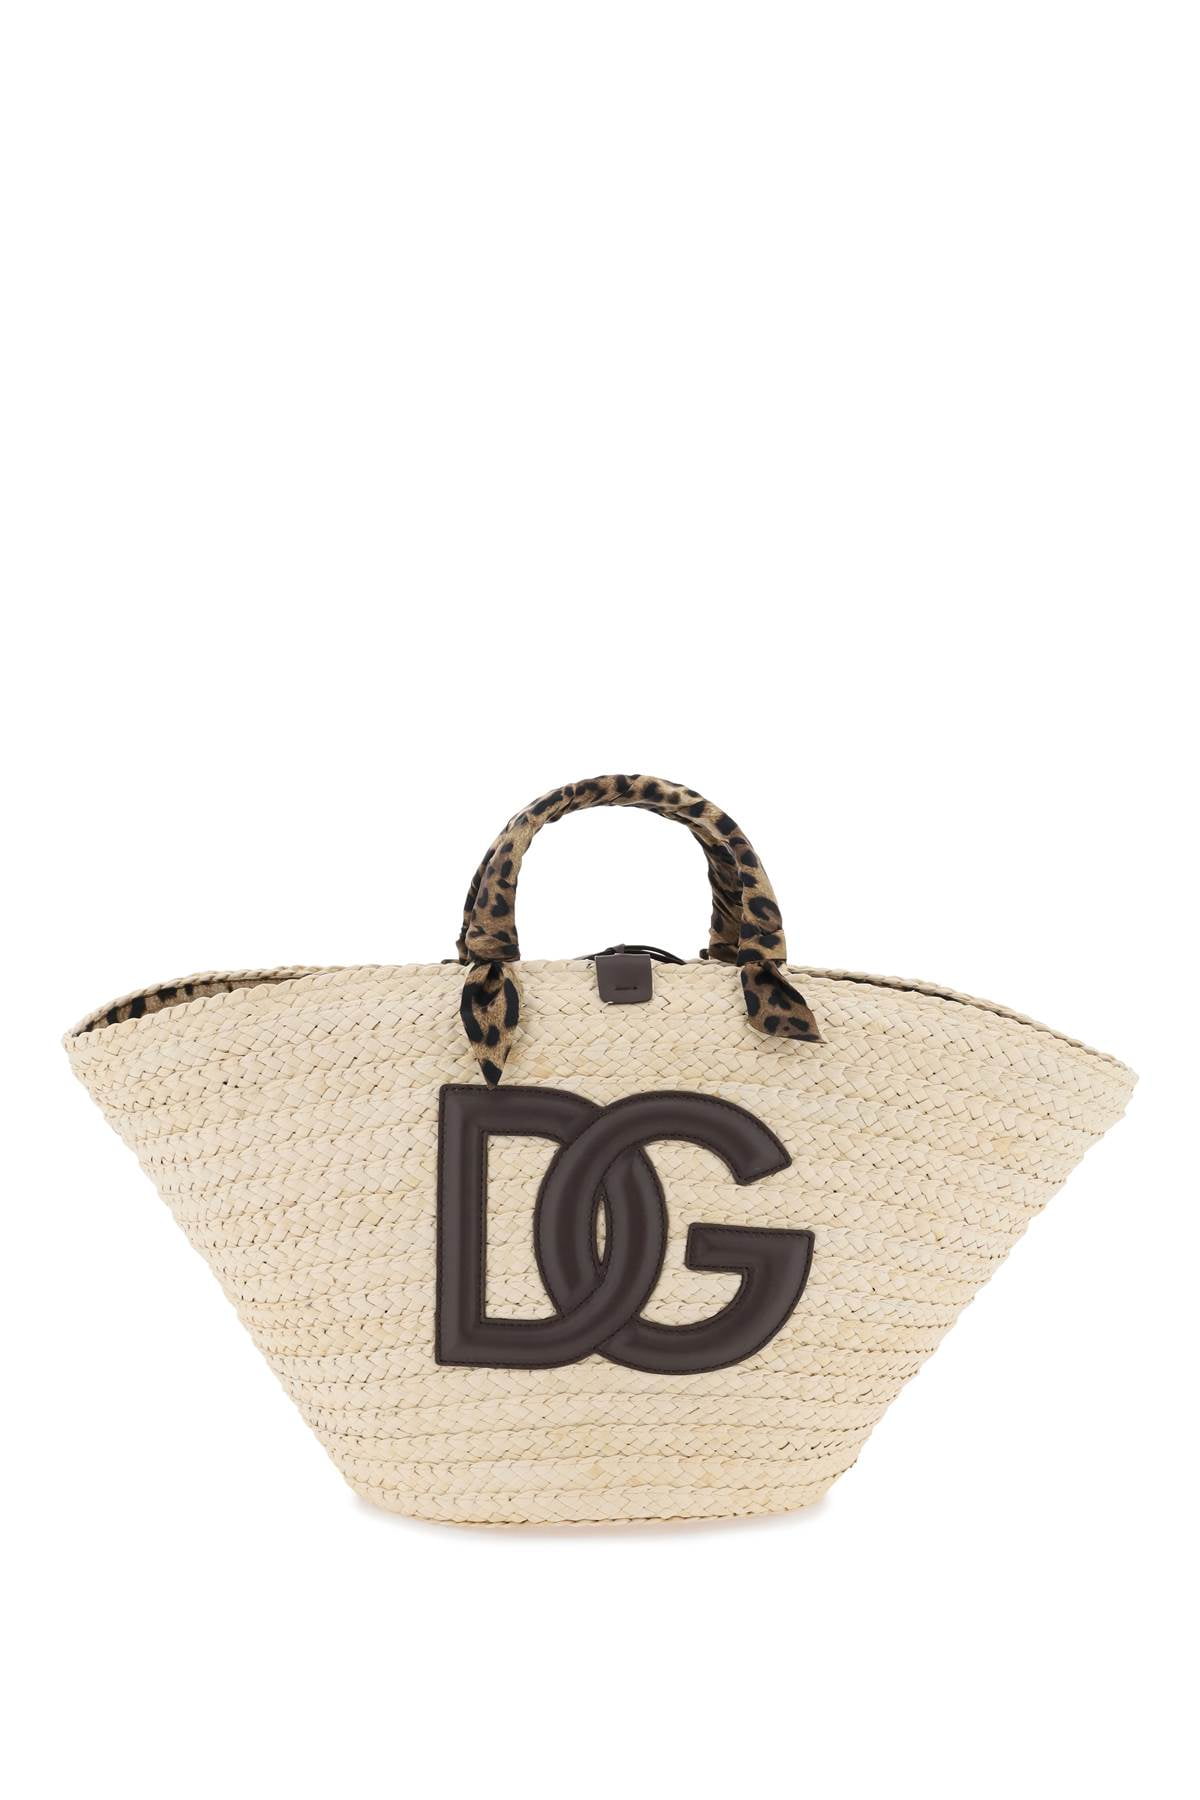 Dolce & Gabbana Kendra Tote Bag Women - Walmart.com